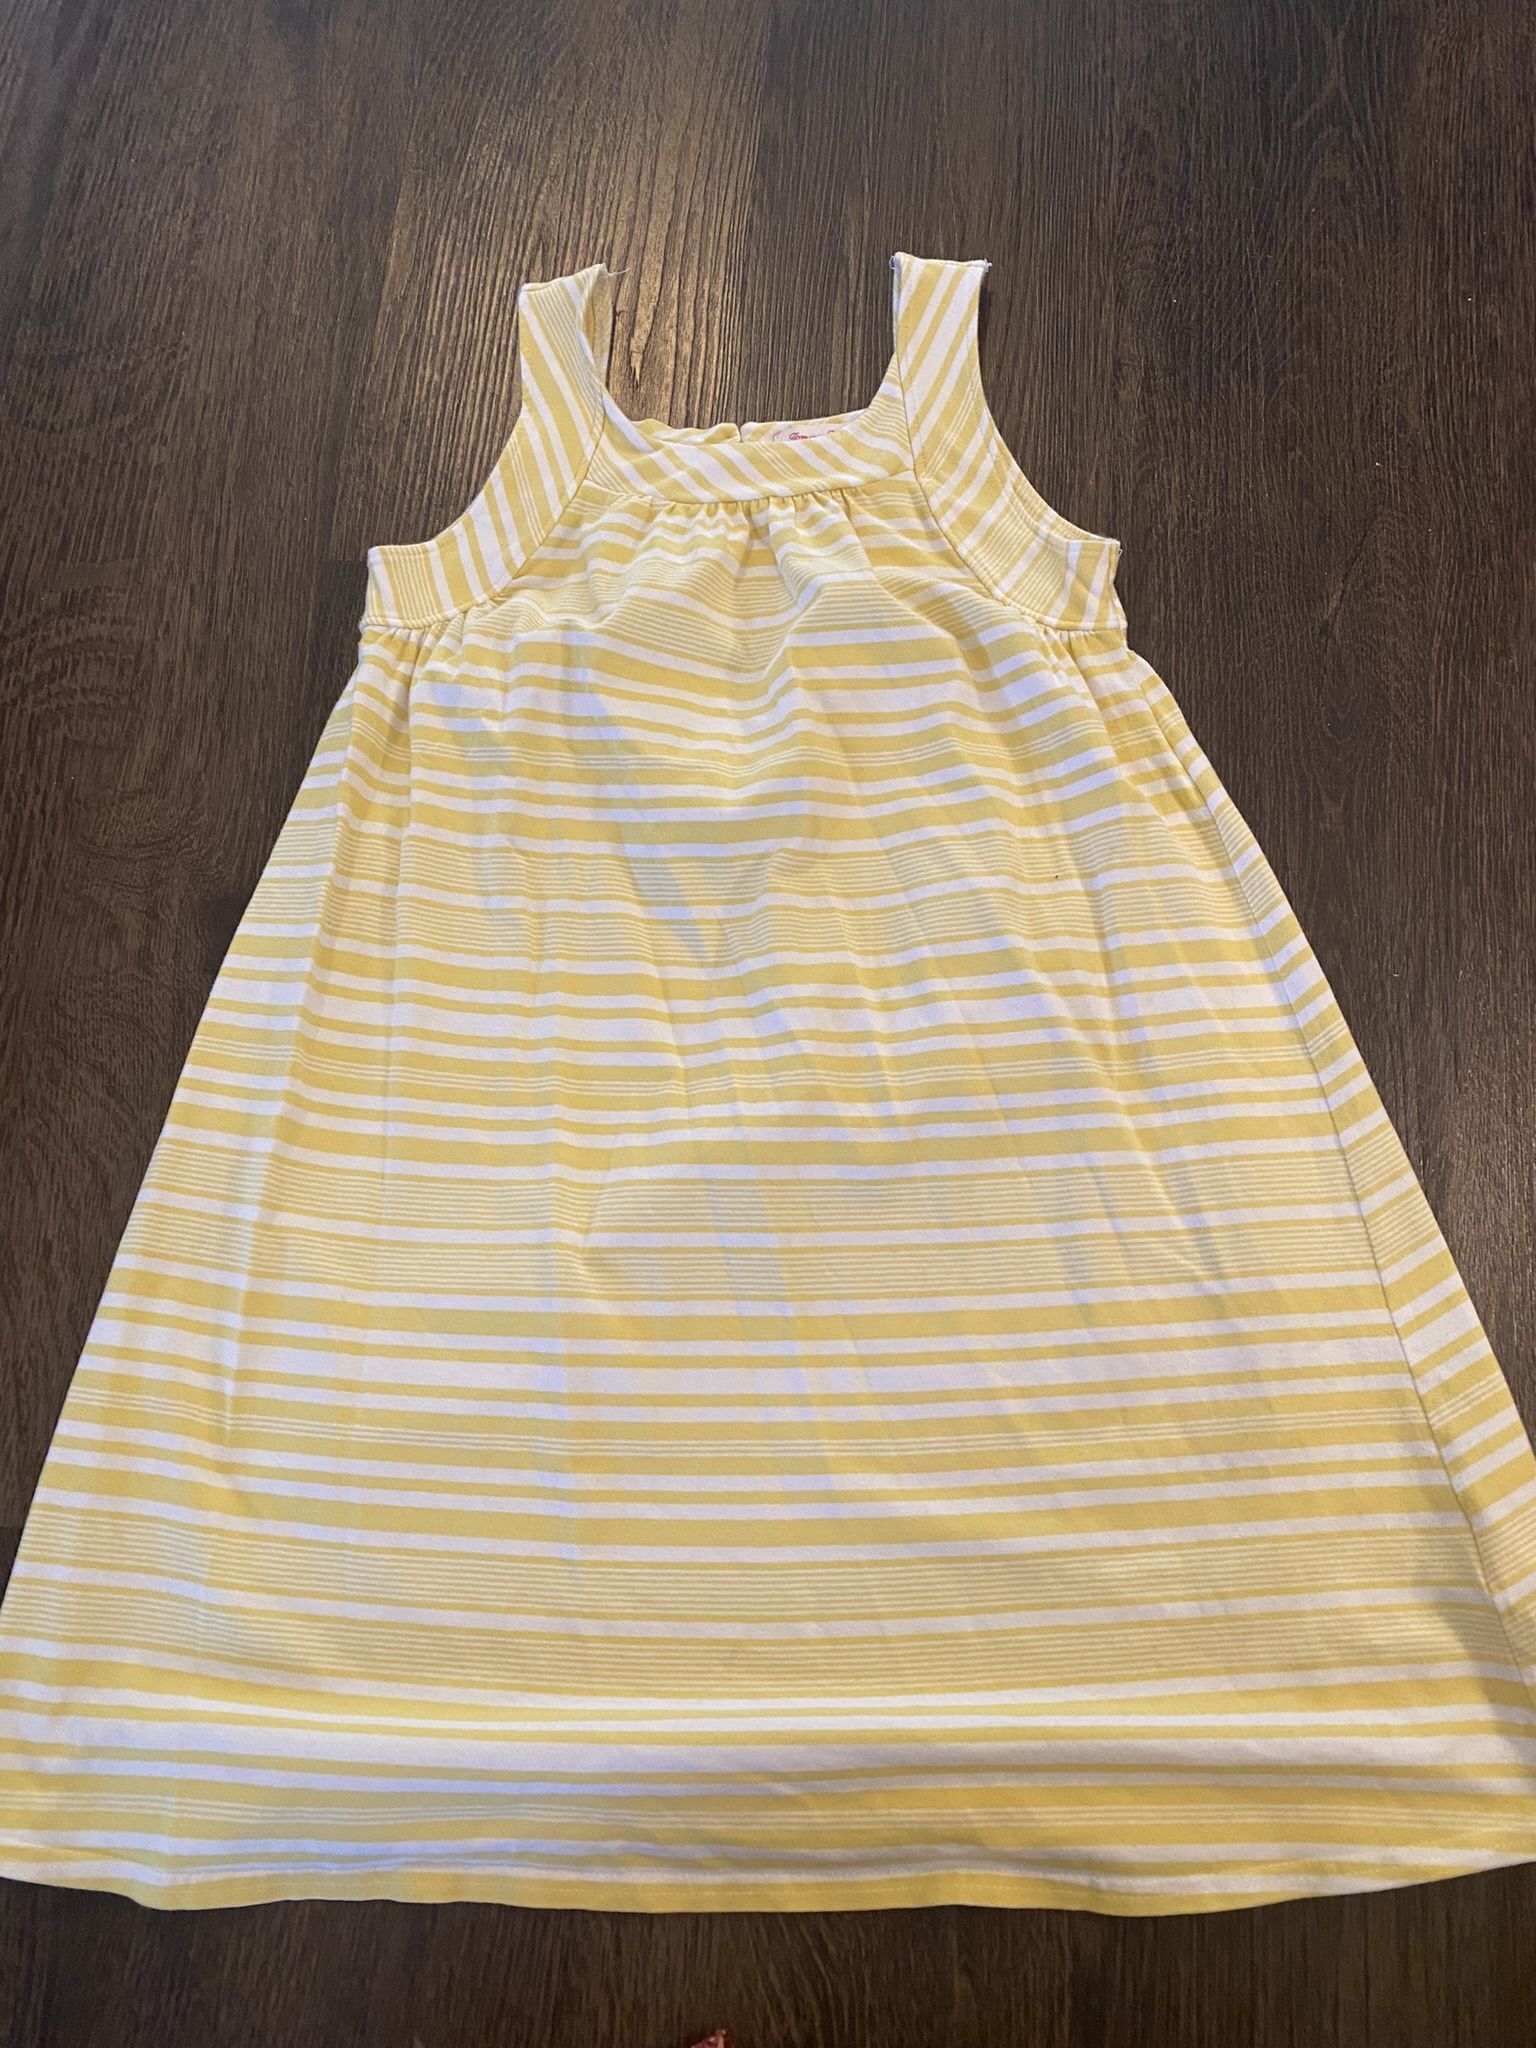 Girls Yellow Striped Dress Size 8 By Tommy Bahama #11